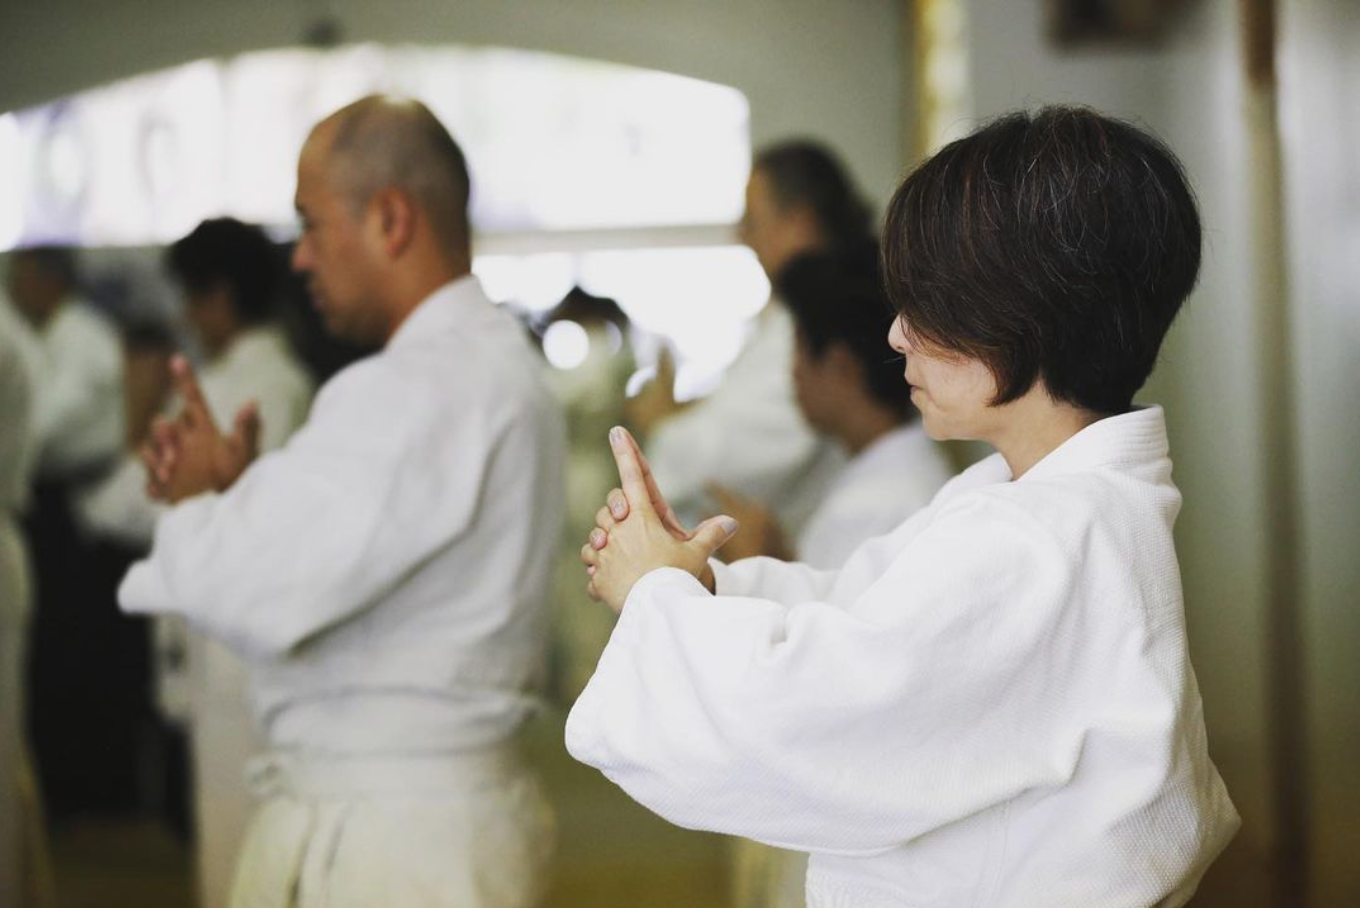 Aikido students